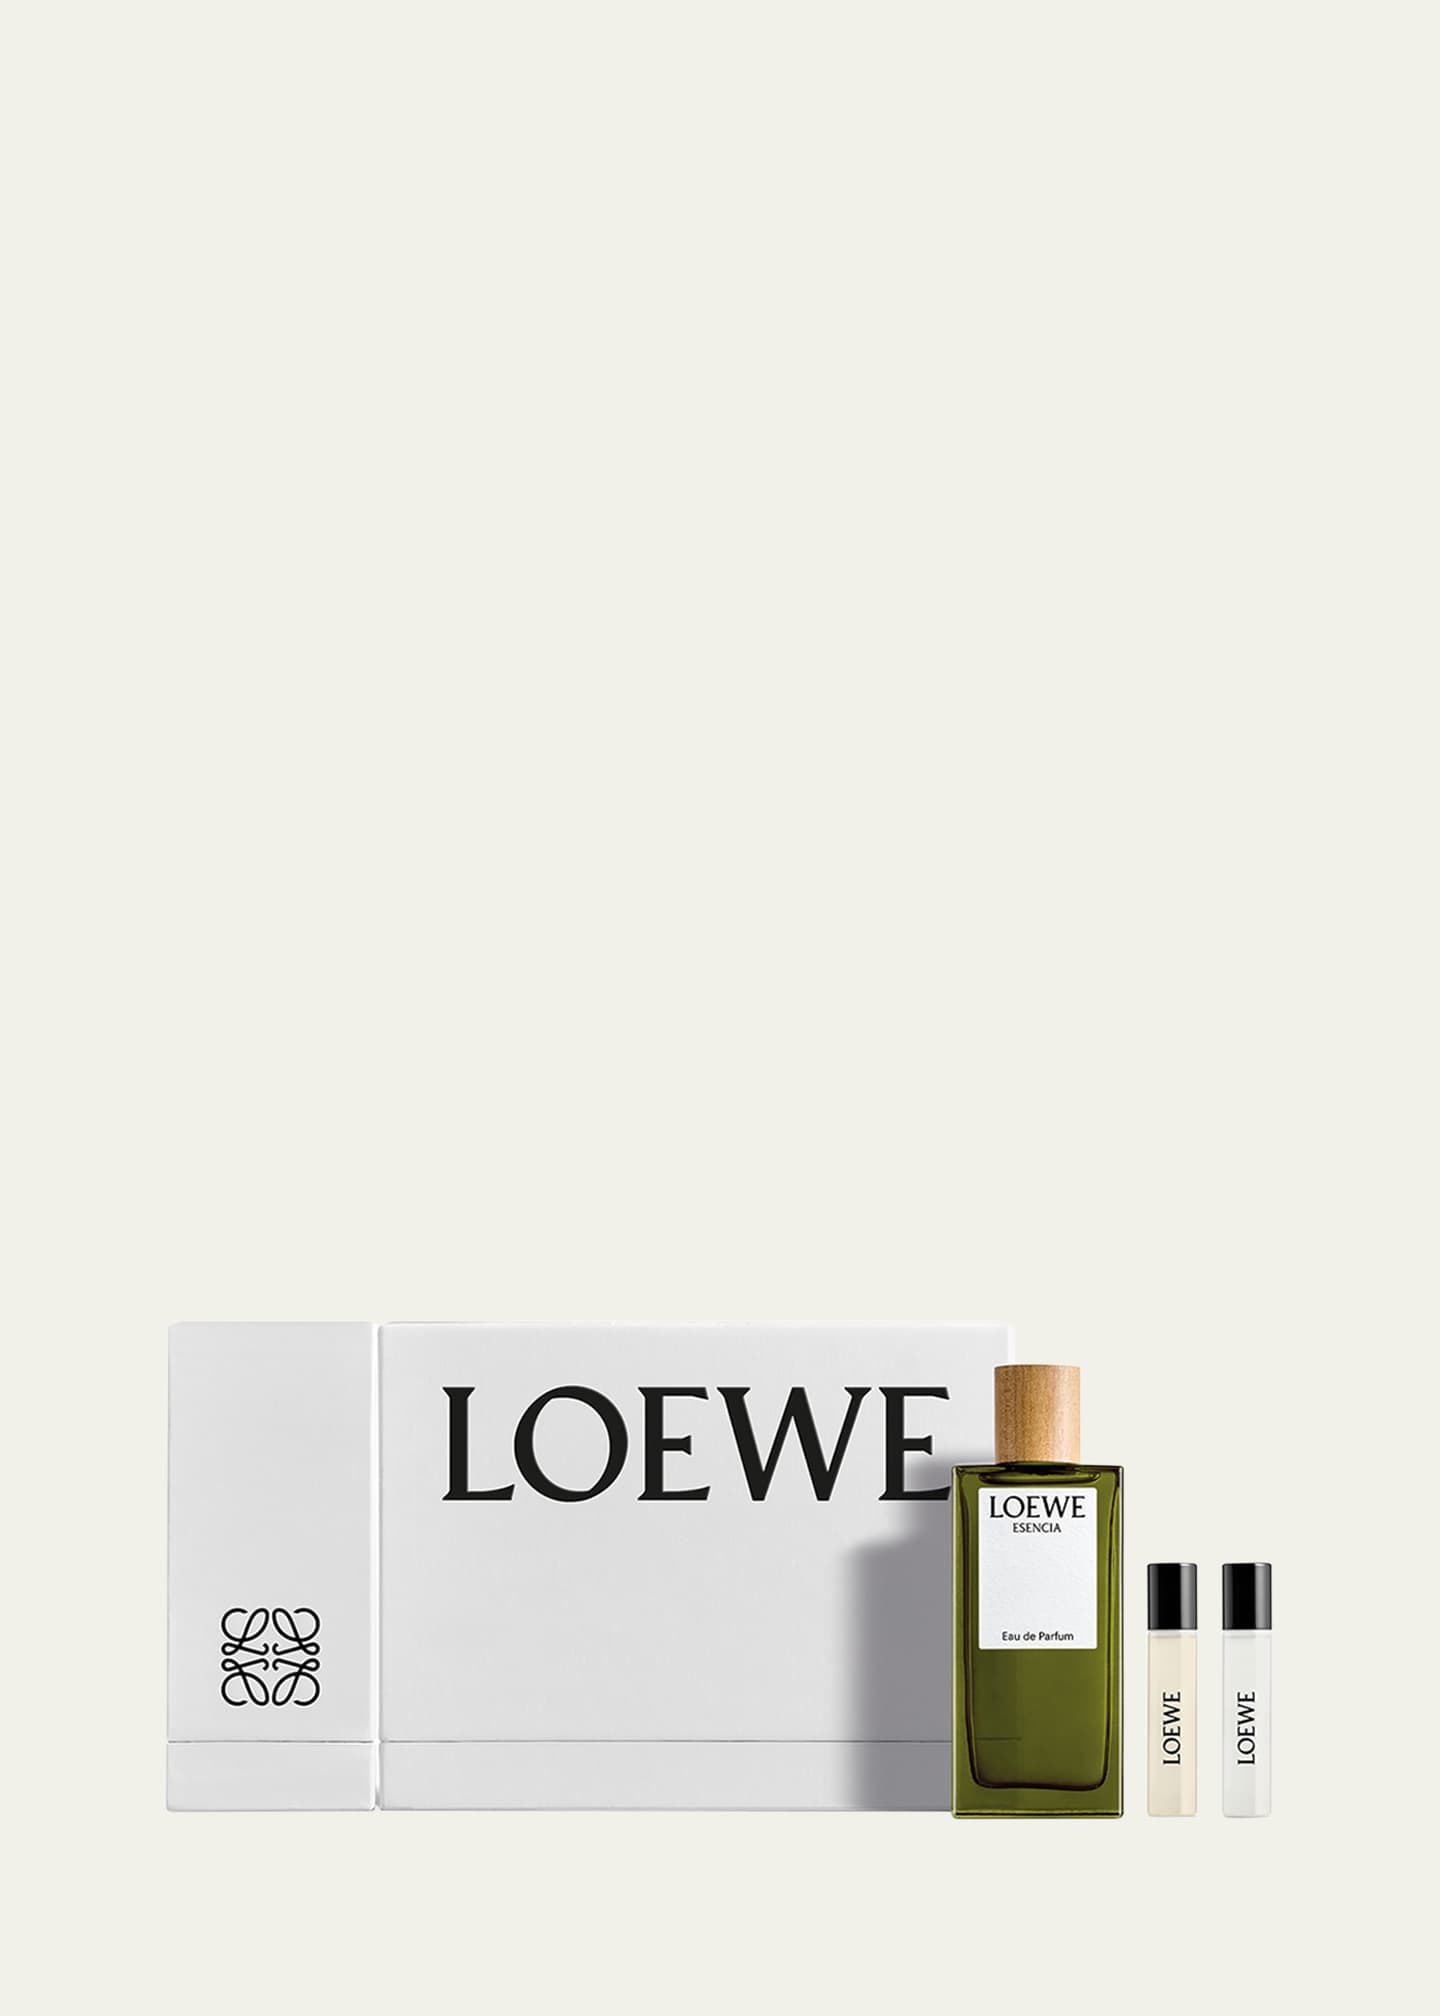 Loewe Esencia Eau de Parfum and Vial Fragrance Set - Bergdorf Goodman